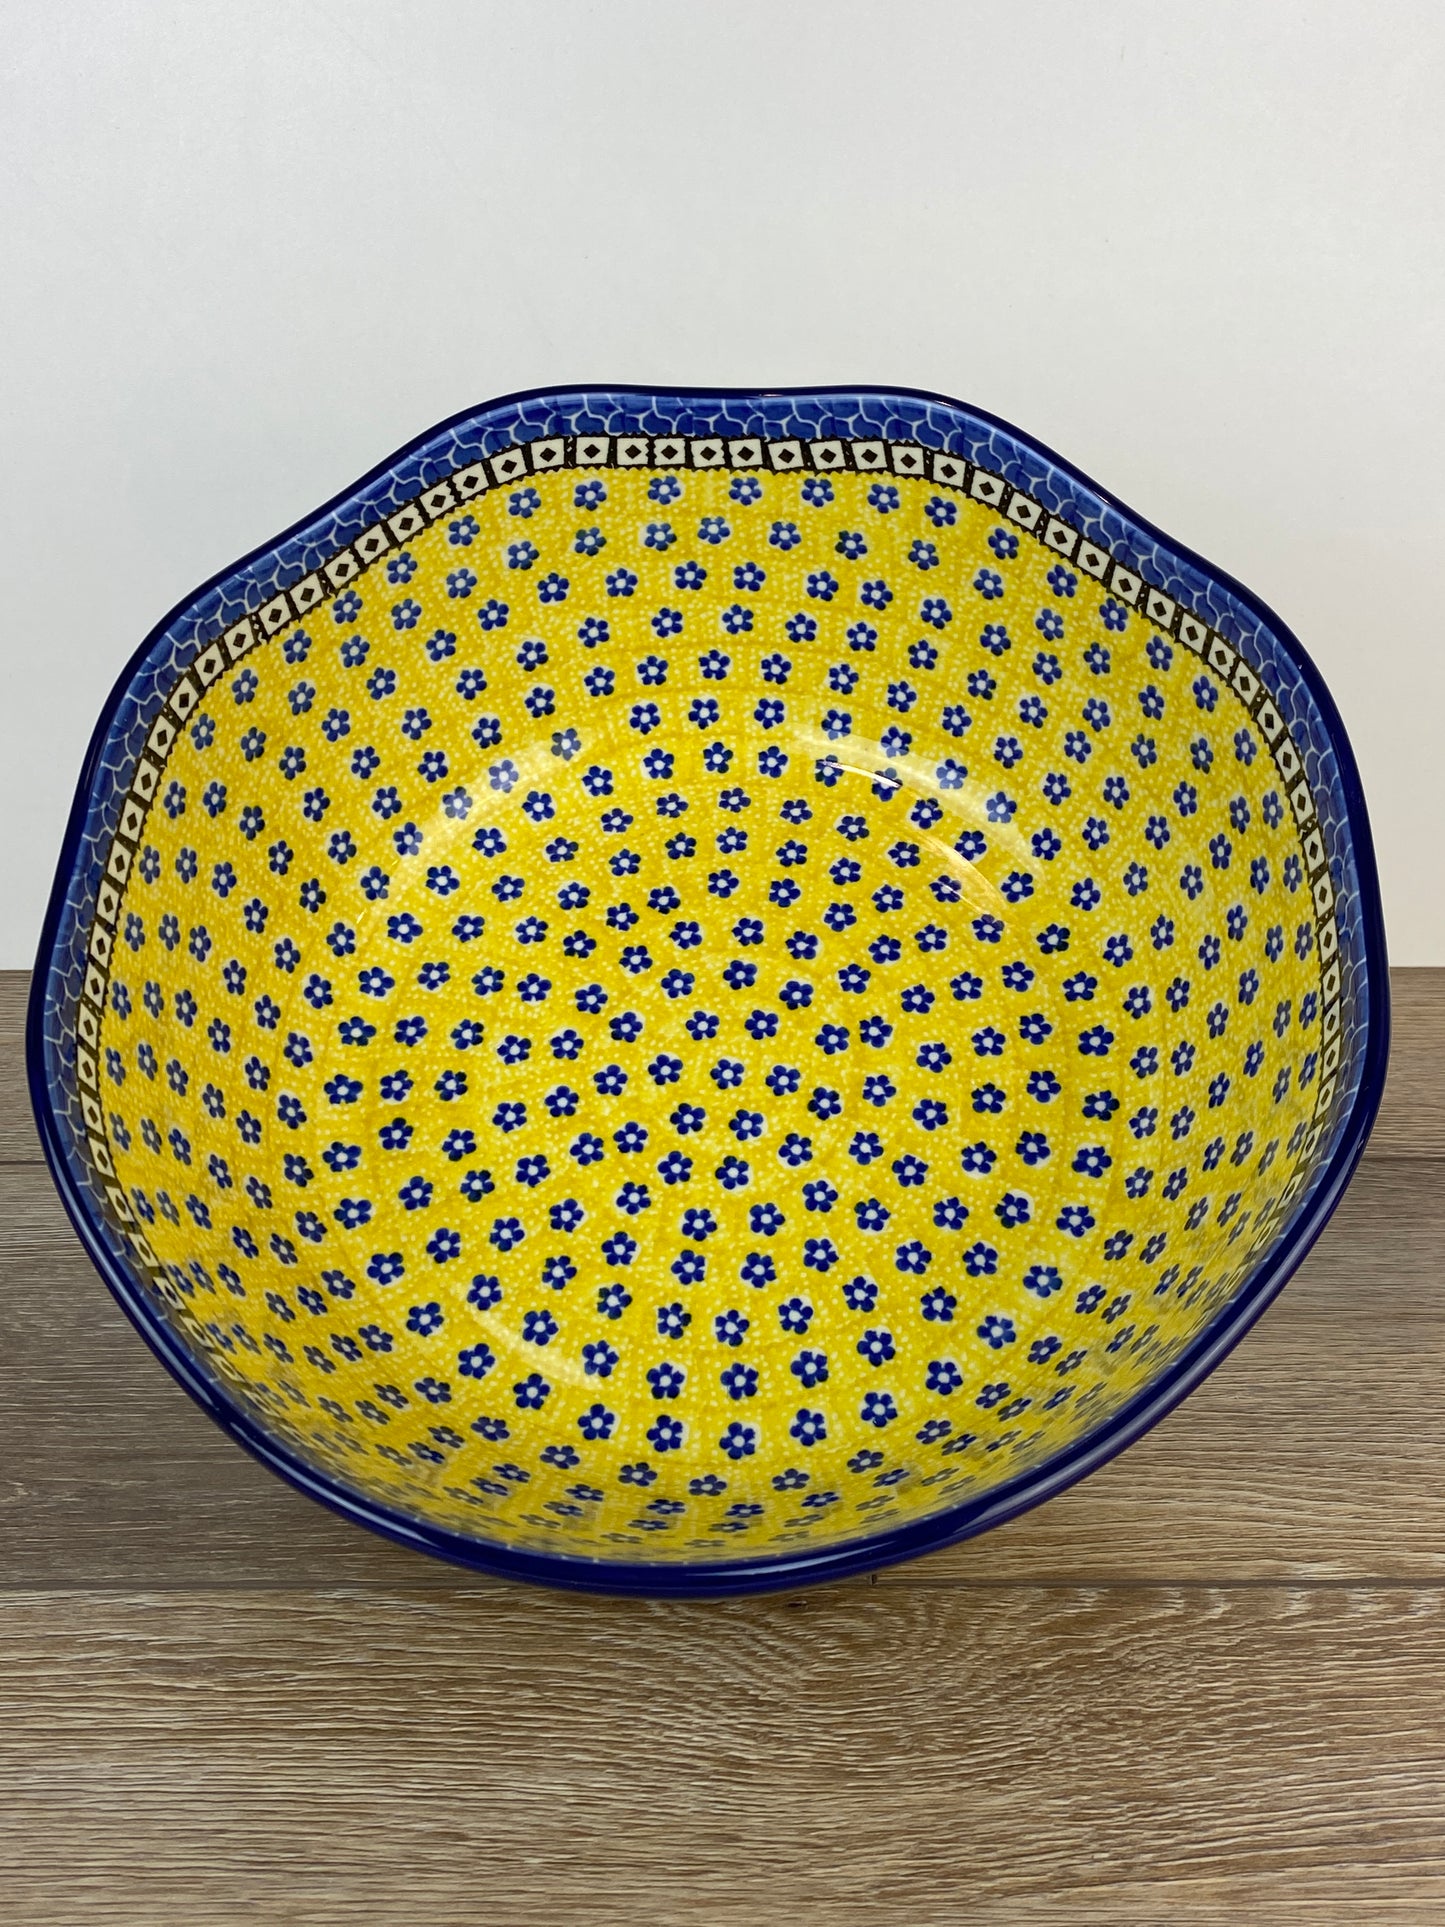 Large Wavy Bowl - Shape 697 - Pattern 859